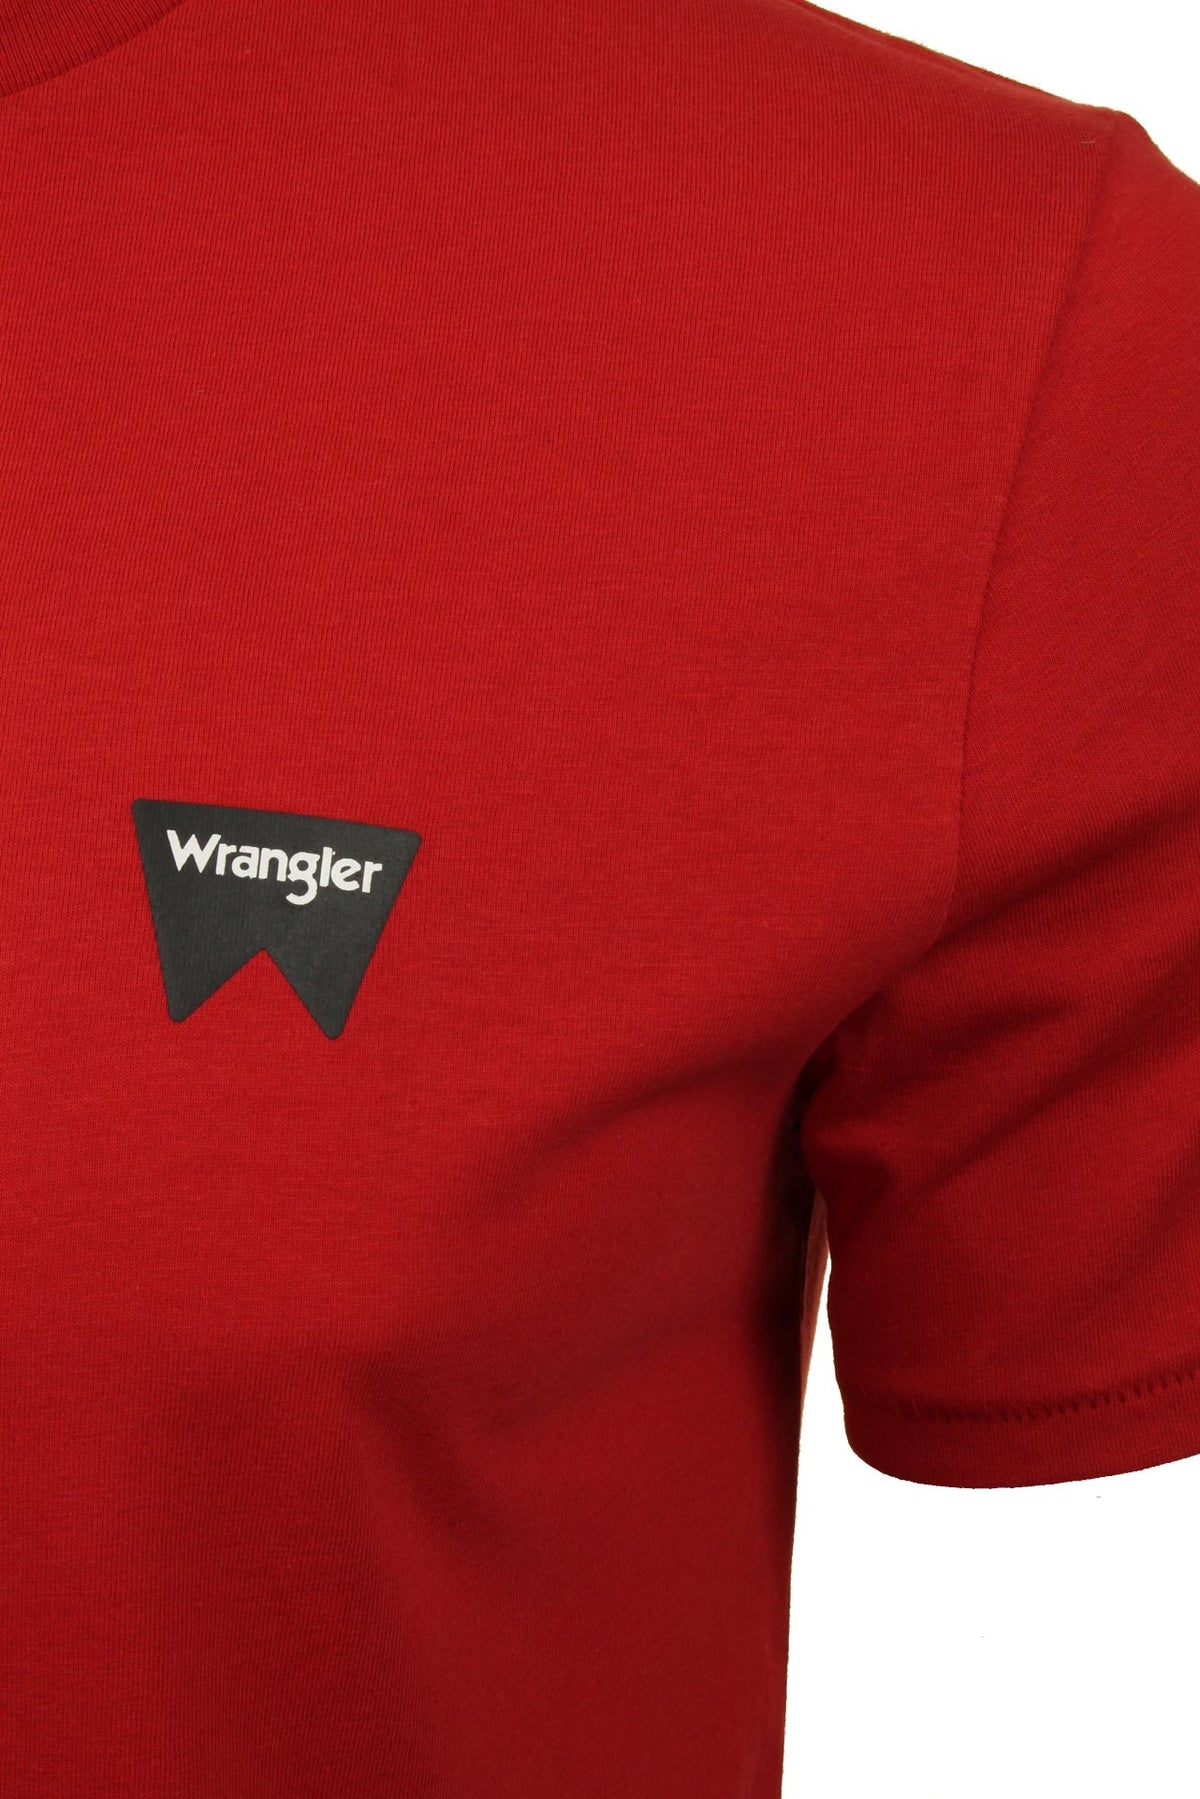 Mens Wrangler T-Shirt  'SS Sign Off Tee' Short Sleeve, 02, W7C07D, Scarlet Red